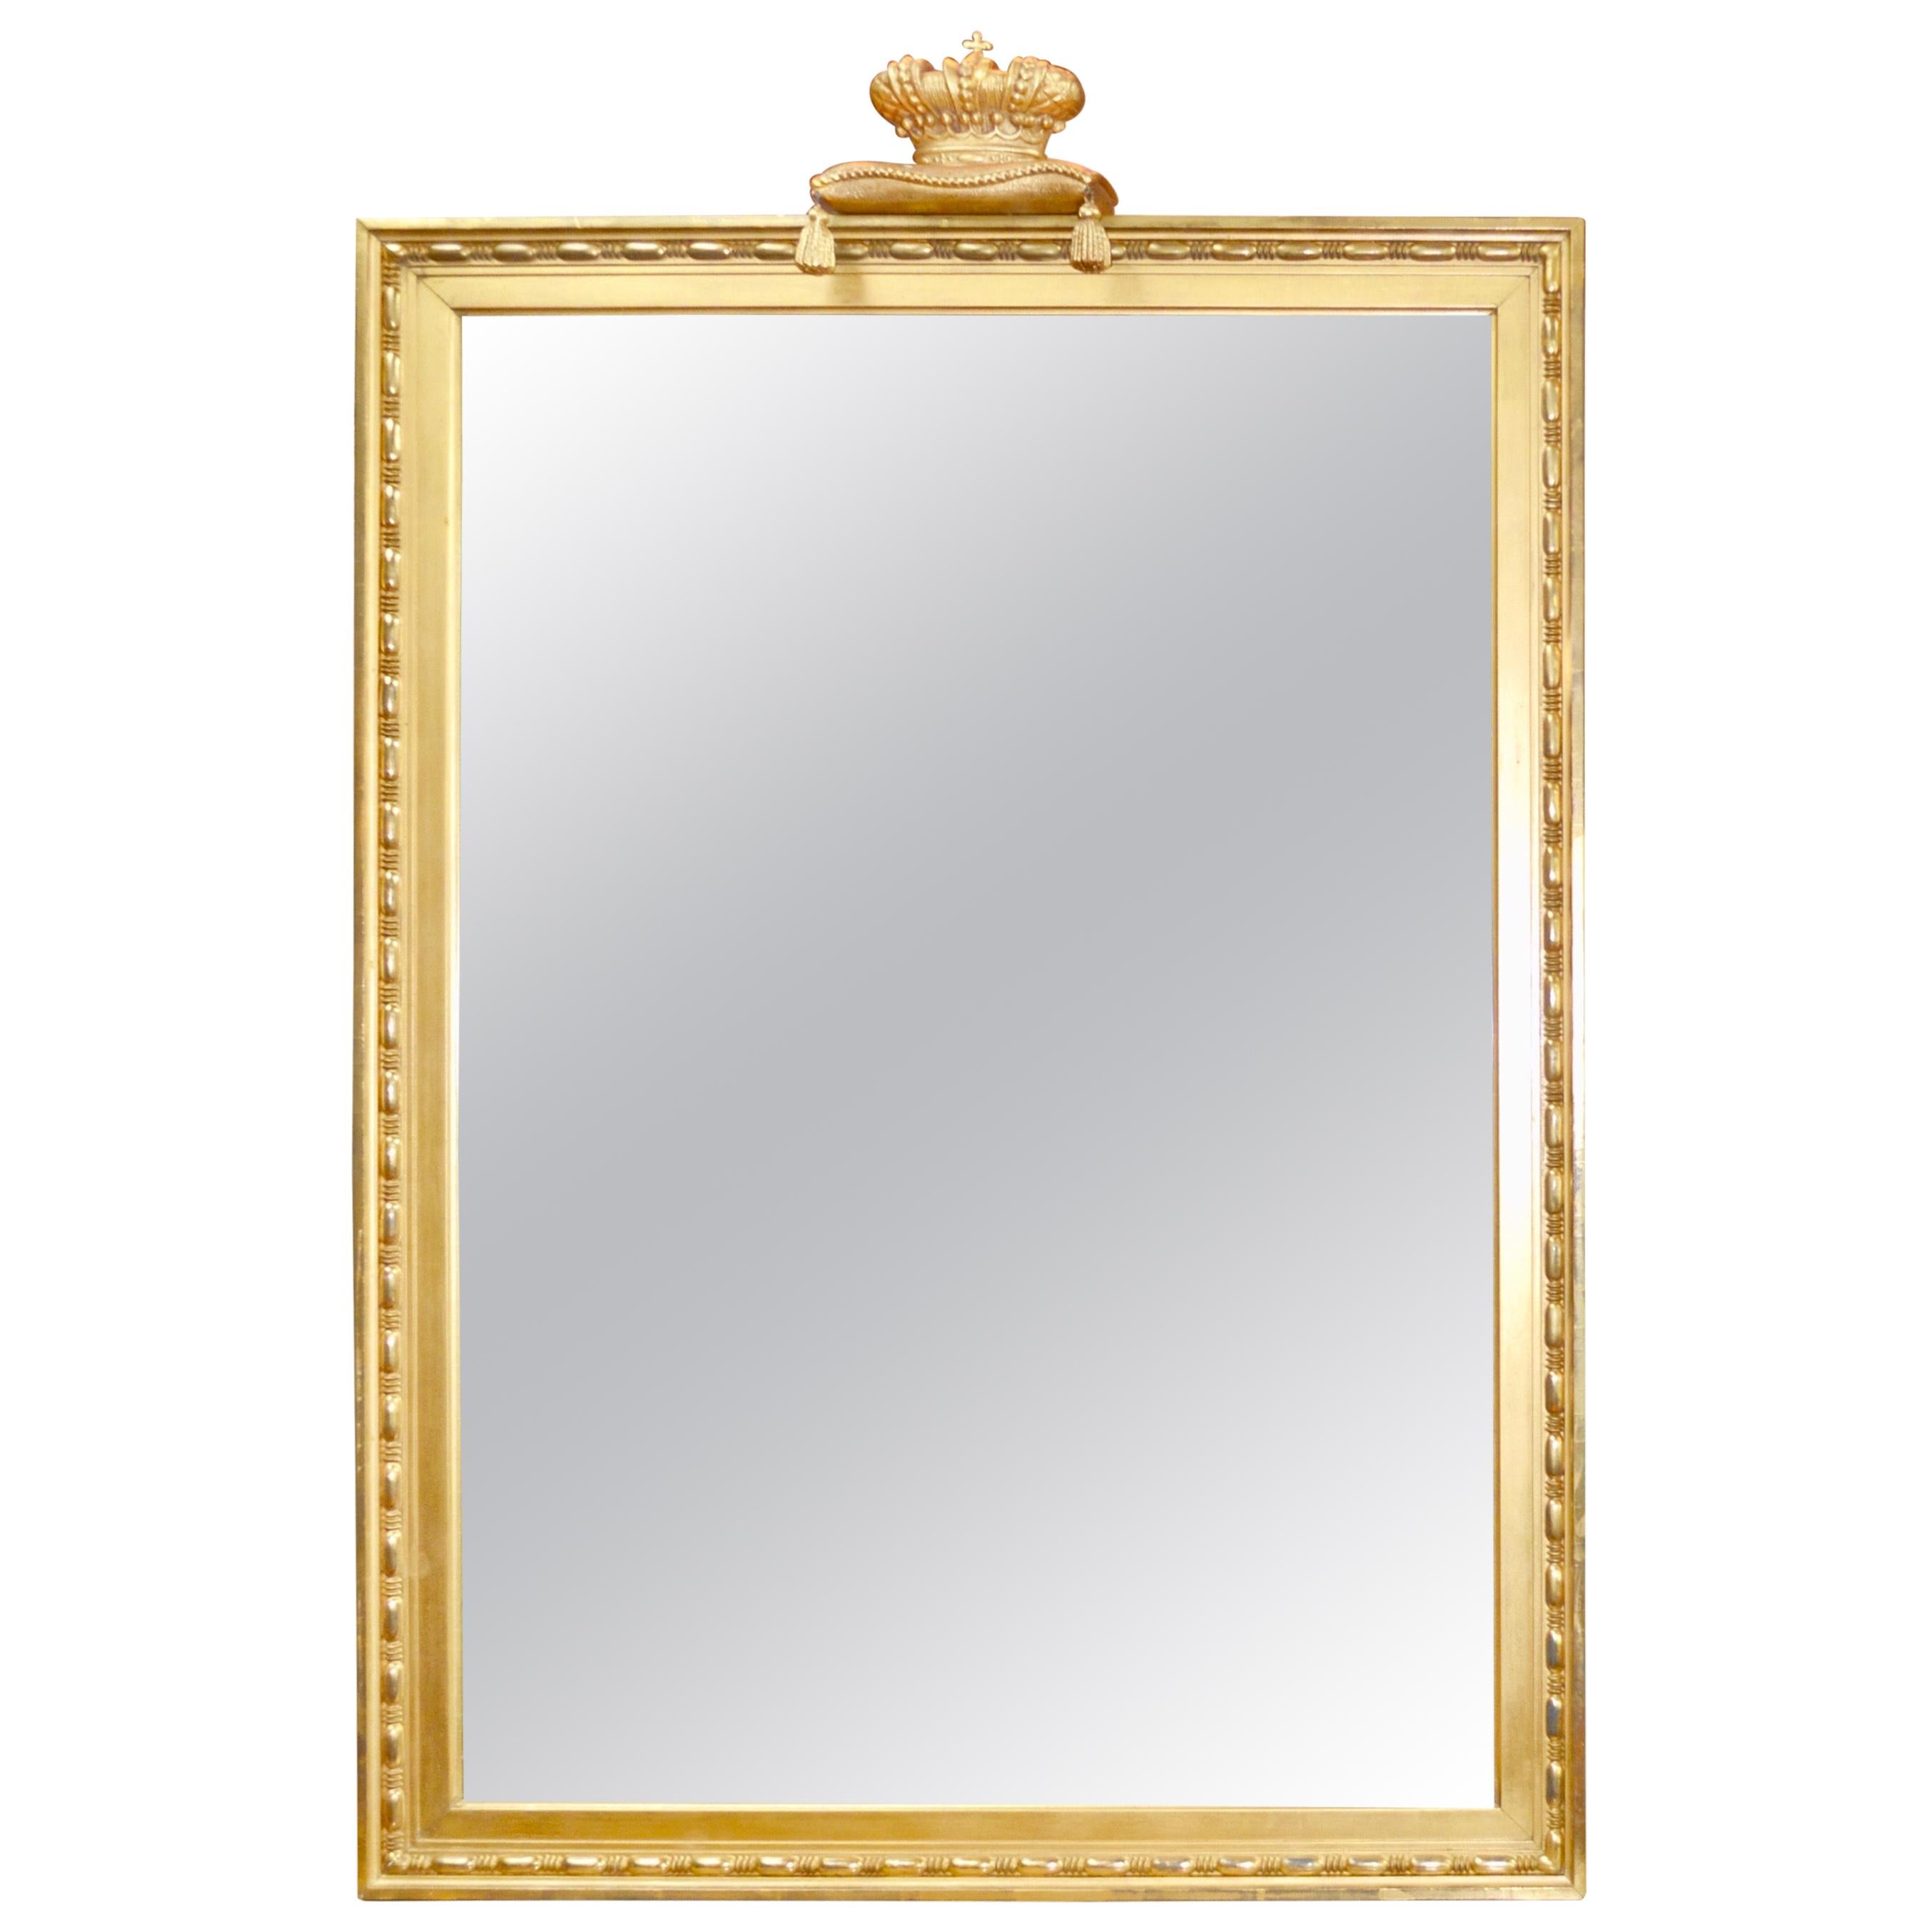 Giltwood English Regency Style Mirror